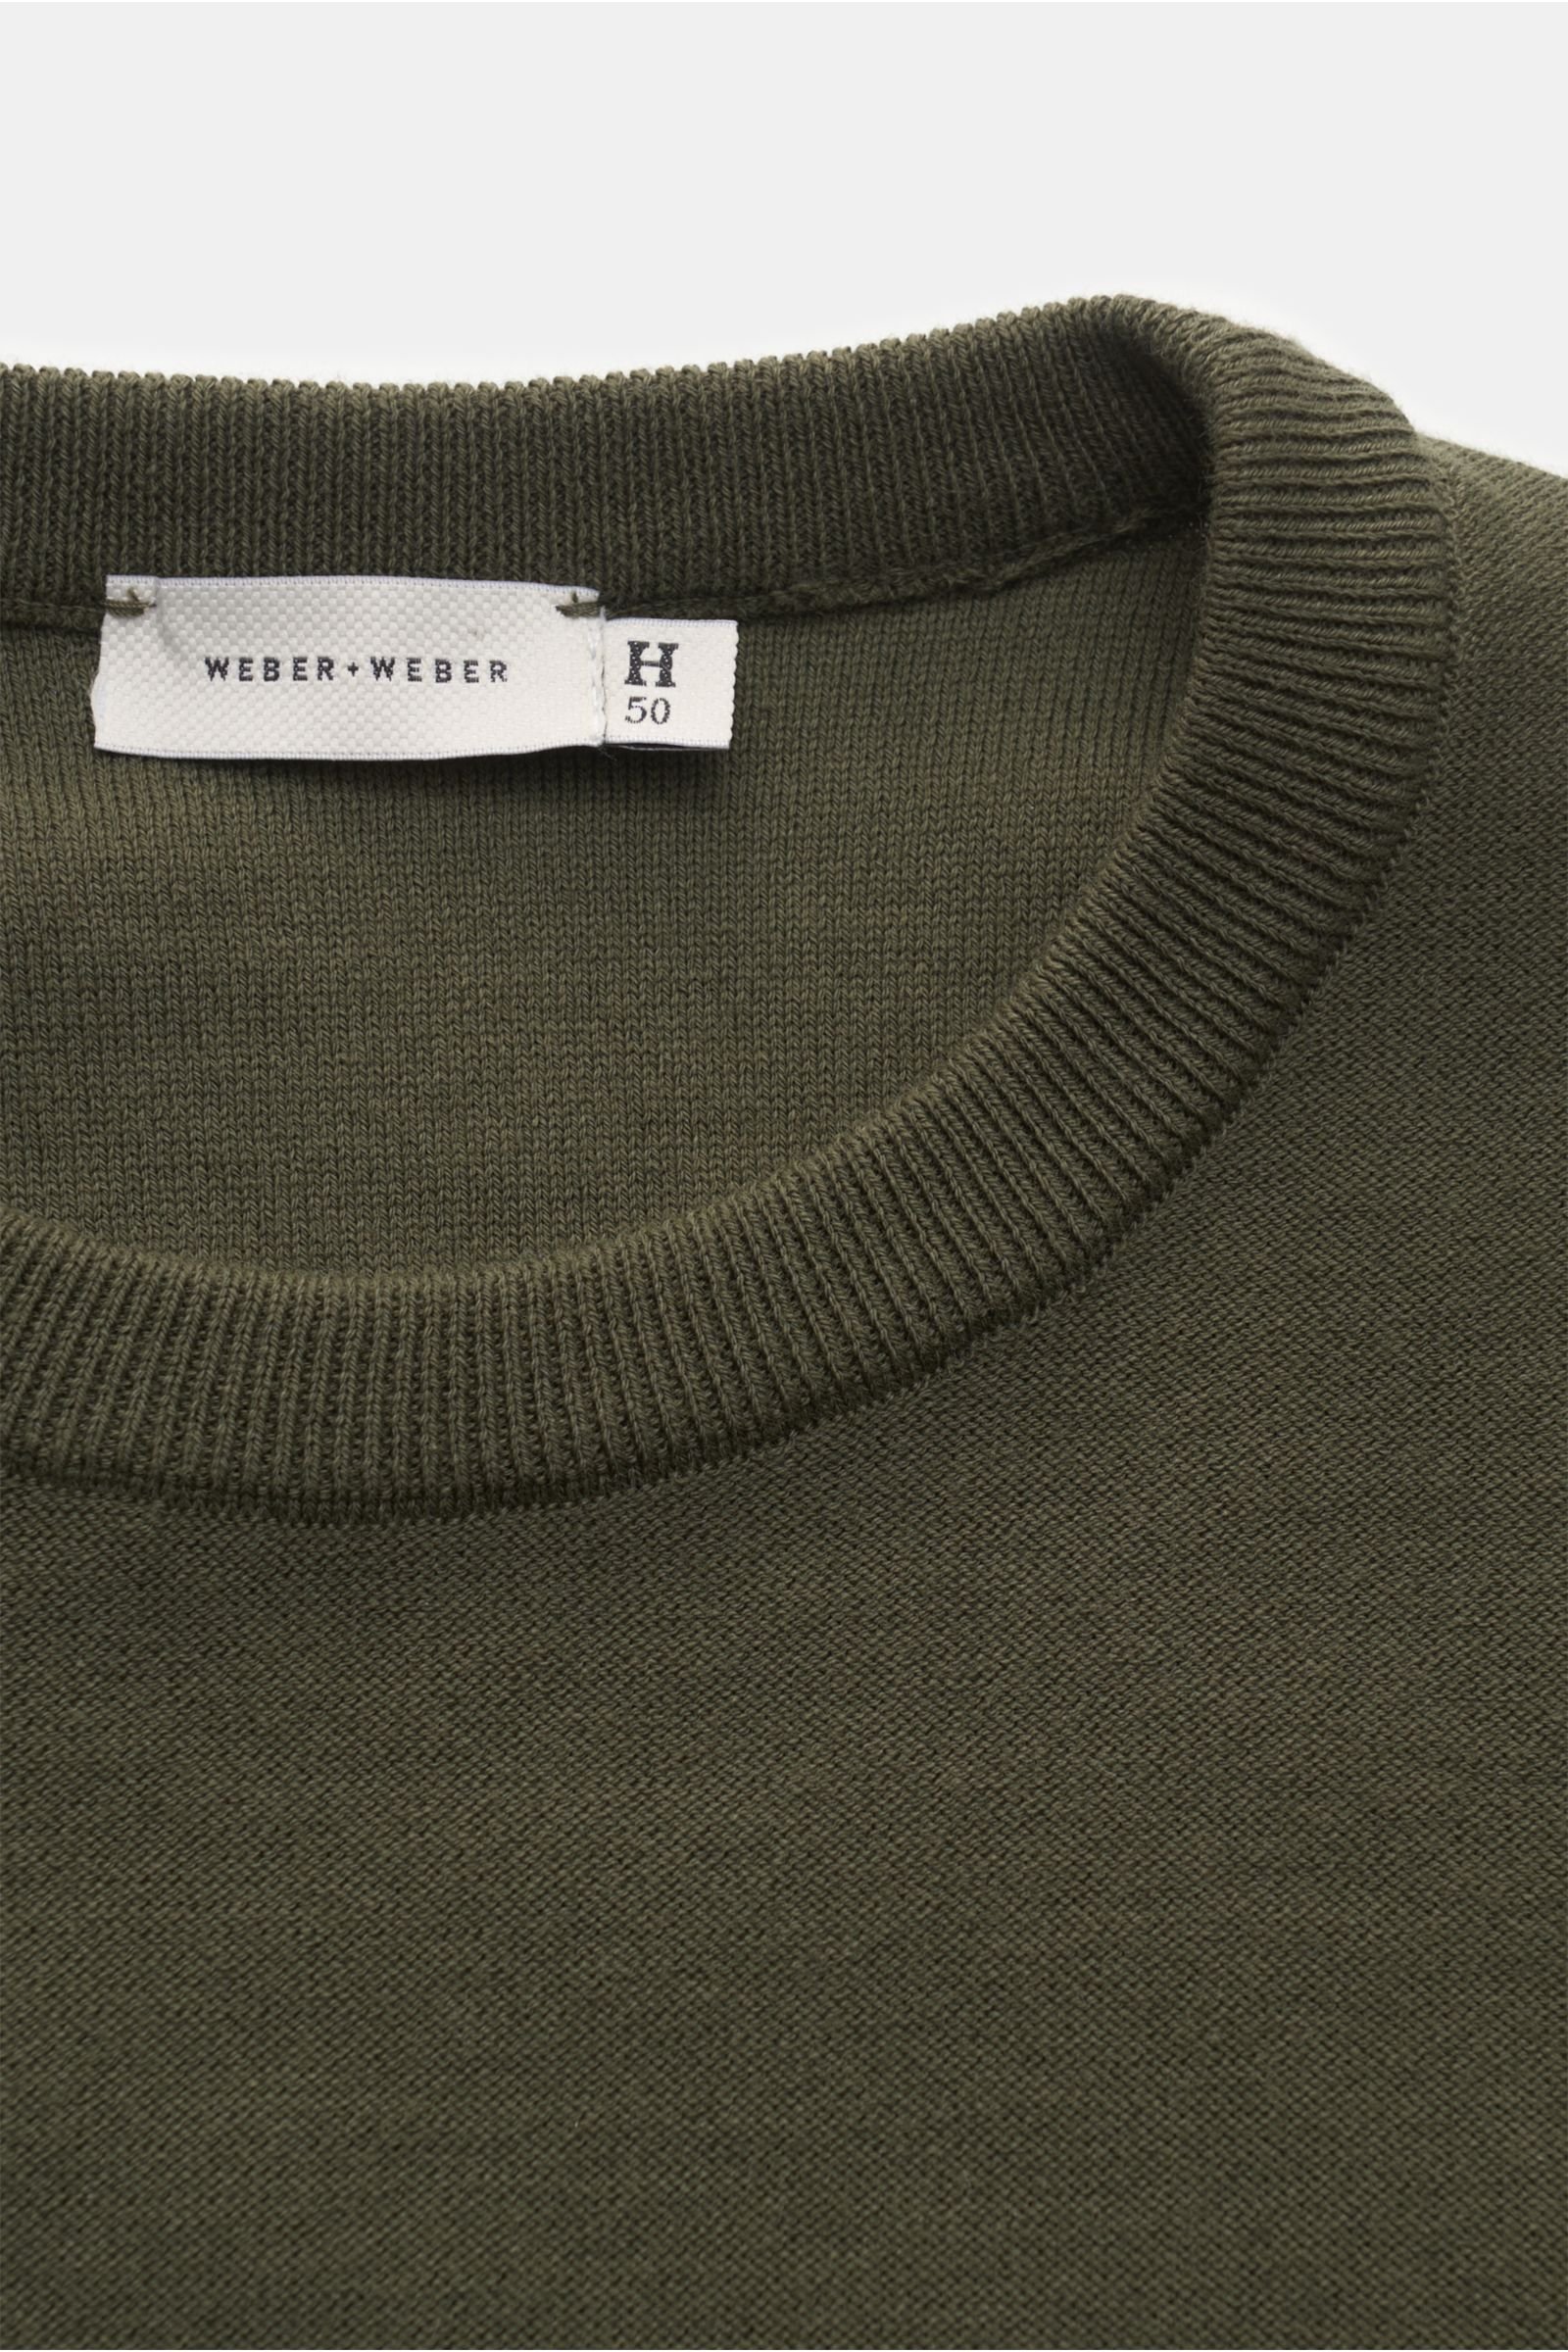 WEBER + WEBER short sleeve crew neck jumper \'Cotton Knit T-Shirt\' olive |  WEBER+WEBER